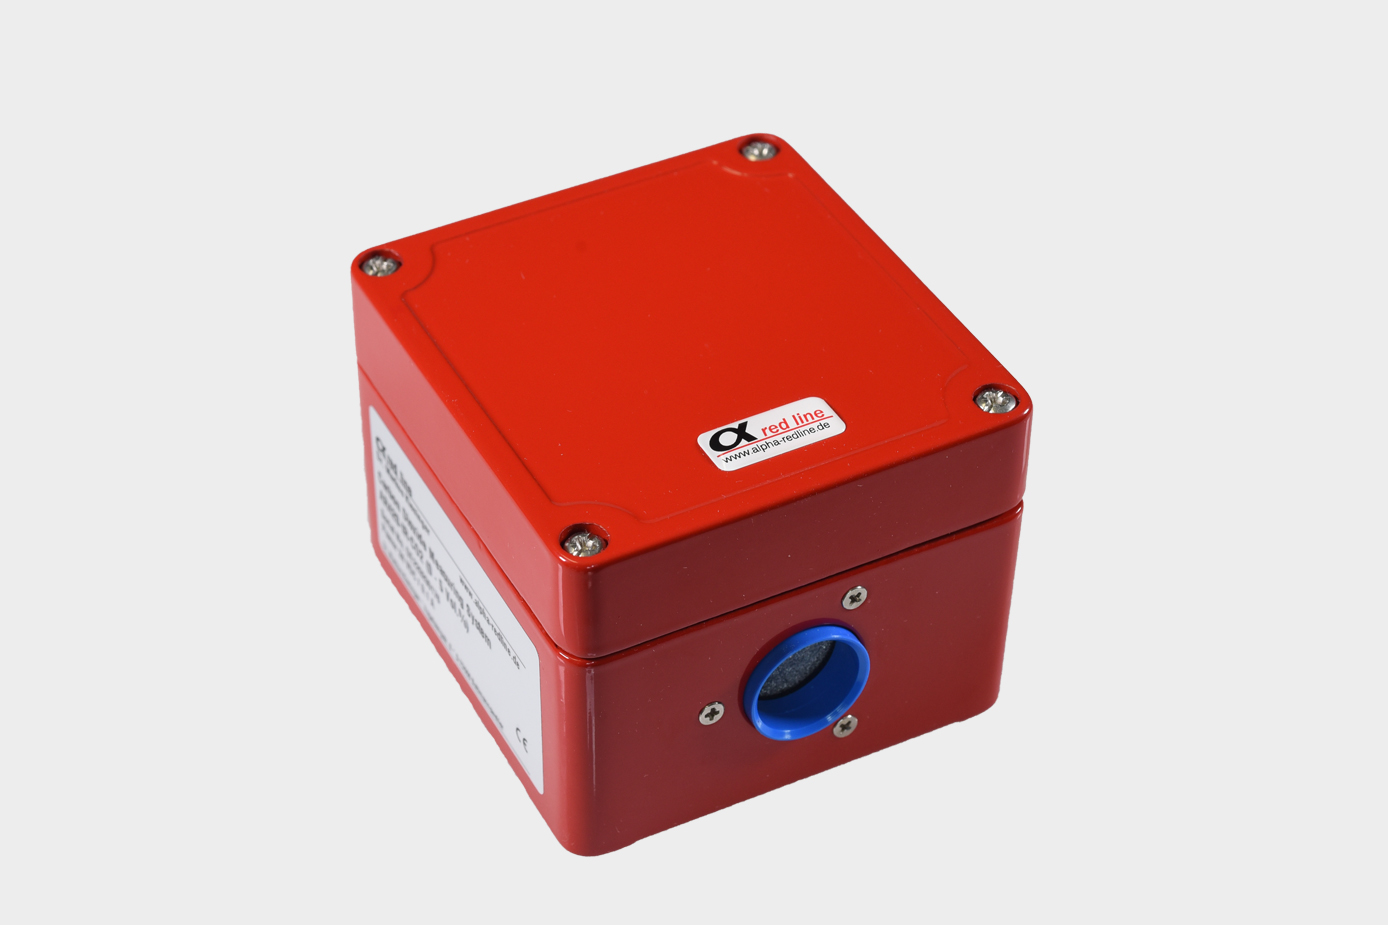 AR420-IR-CO2, CO2-Sensor zur Luftüberwachung, Wartungsarmes Infrarot-Messprinzip (NDIR), Signalausgang 4 - 20 mA oder 0 - 10 VDC, Umgebungstemperatur -10 ... +50 °C, Maximaler Messbereich bis 6000 ppm, Sonderausführung für Tiefkühlhäuser (-25 °C)